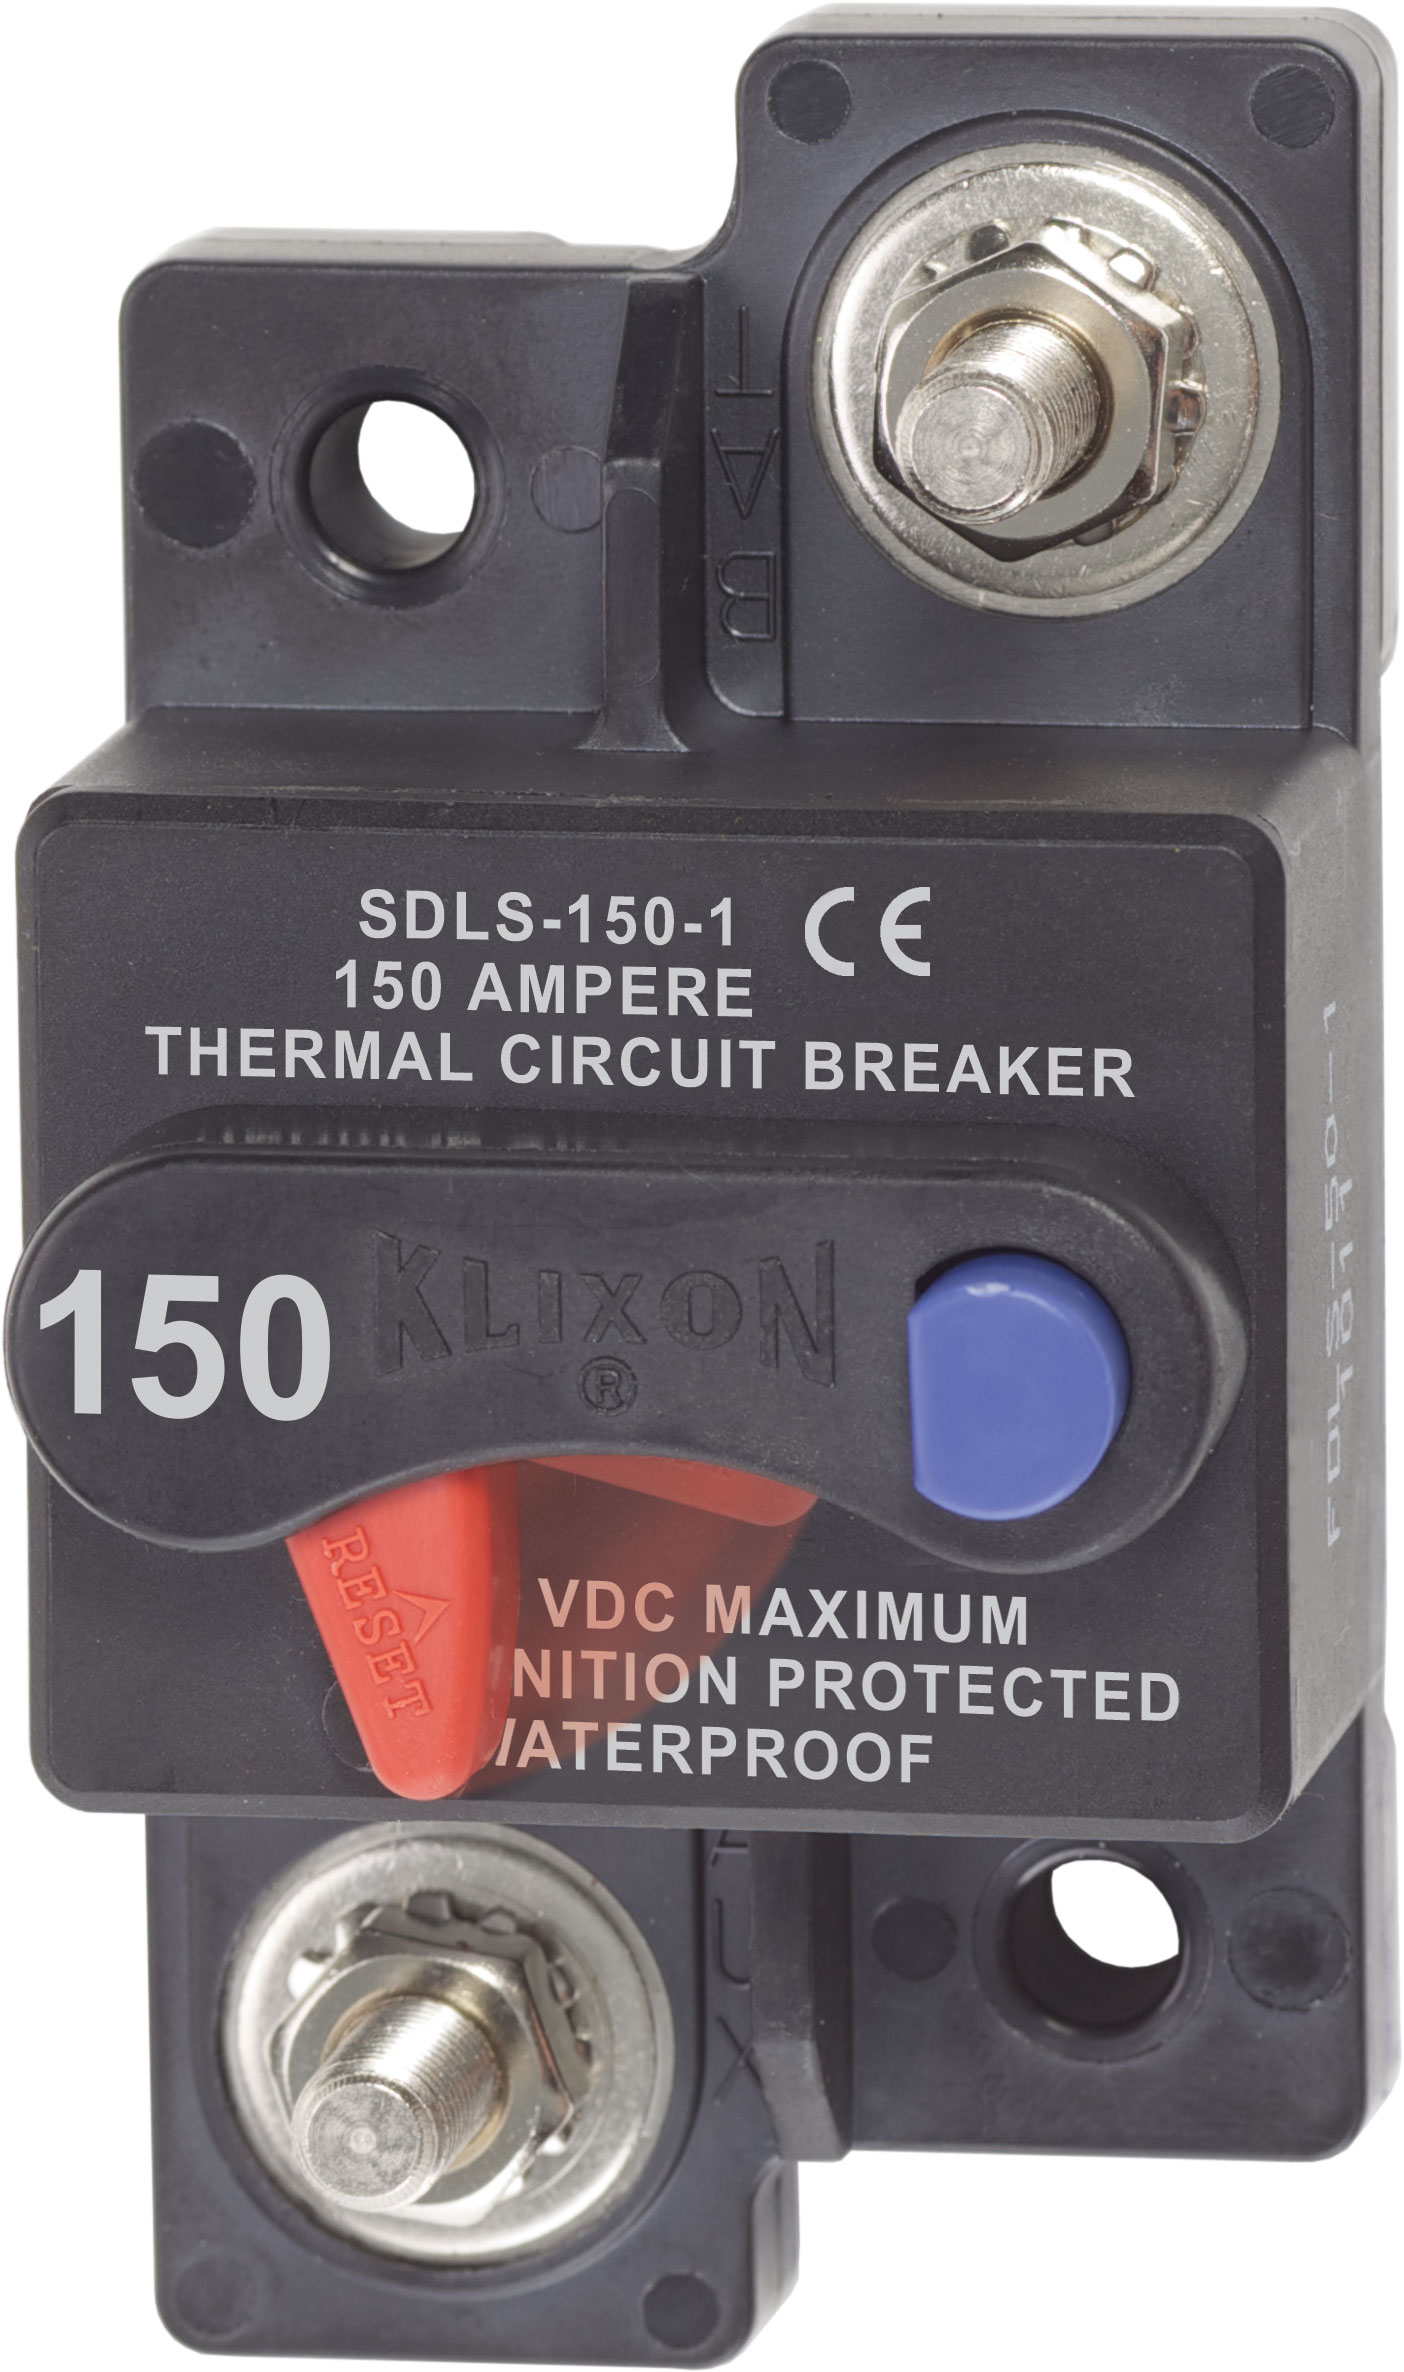 Part# 7179  Manufacturer Blue Sea Systems  Part Type Circuit Breaker